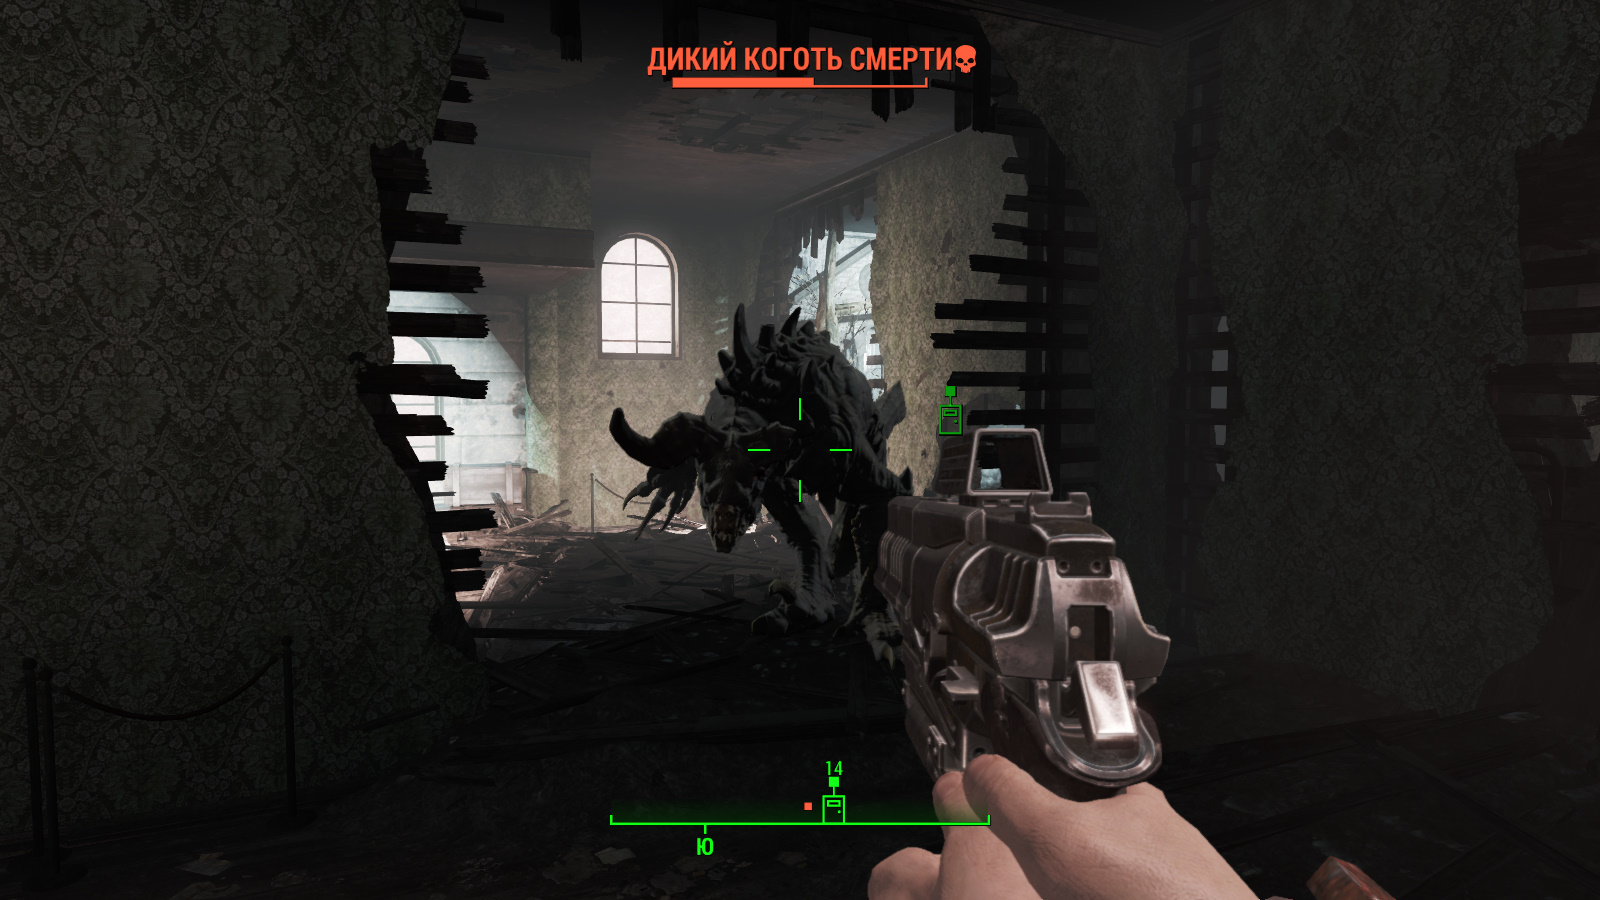 Fallout 4 приручить когтя смерти фото 70